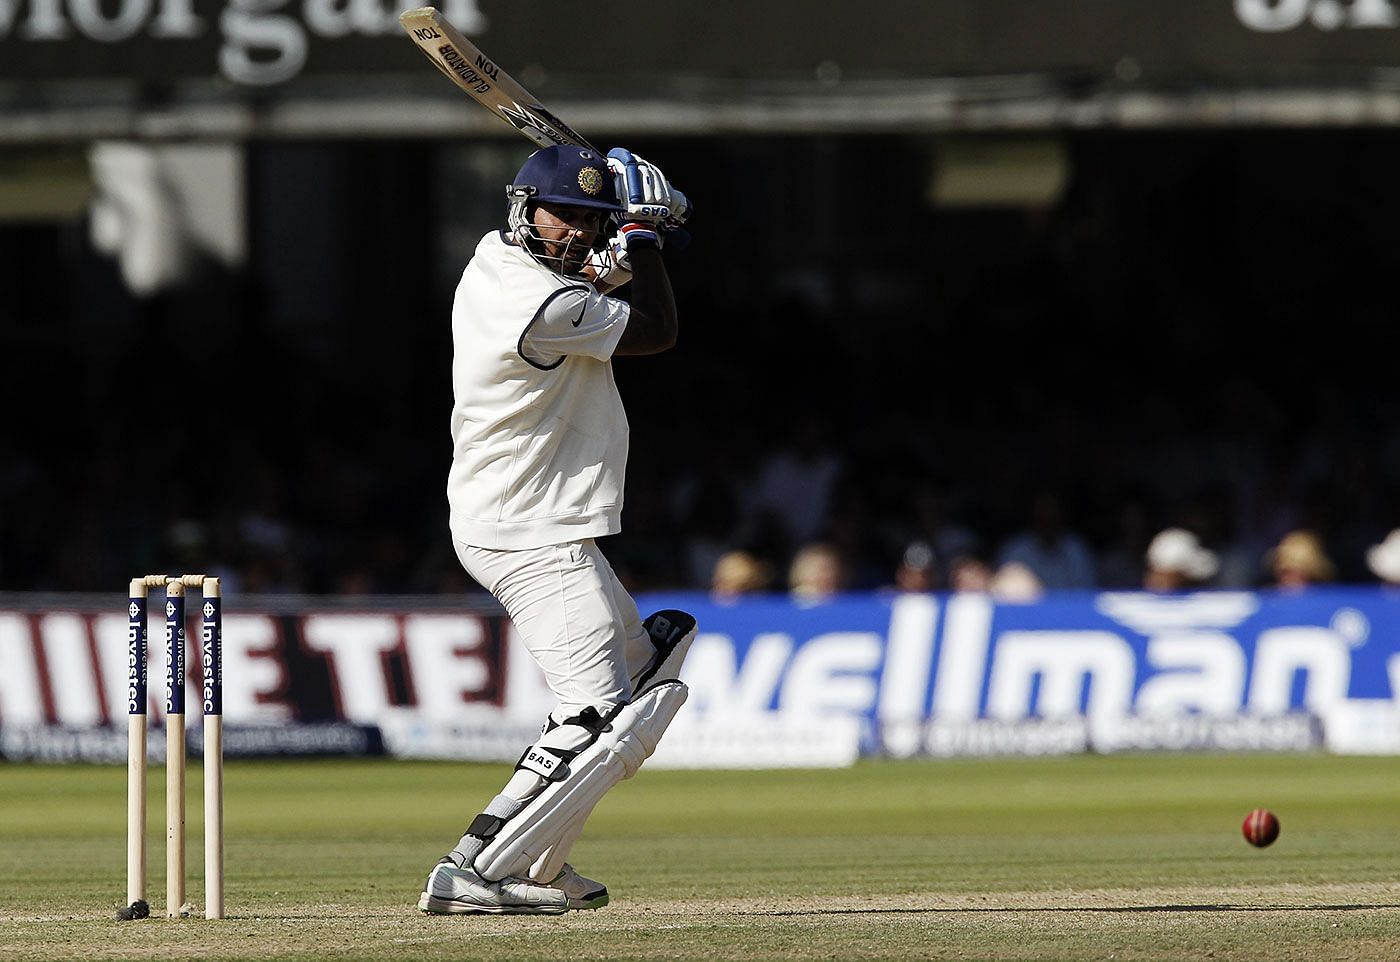 Murali Vijay played a beautiful innings in the opening test at Trent Bridge